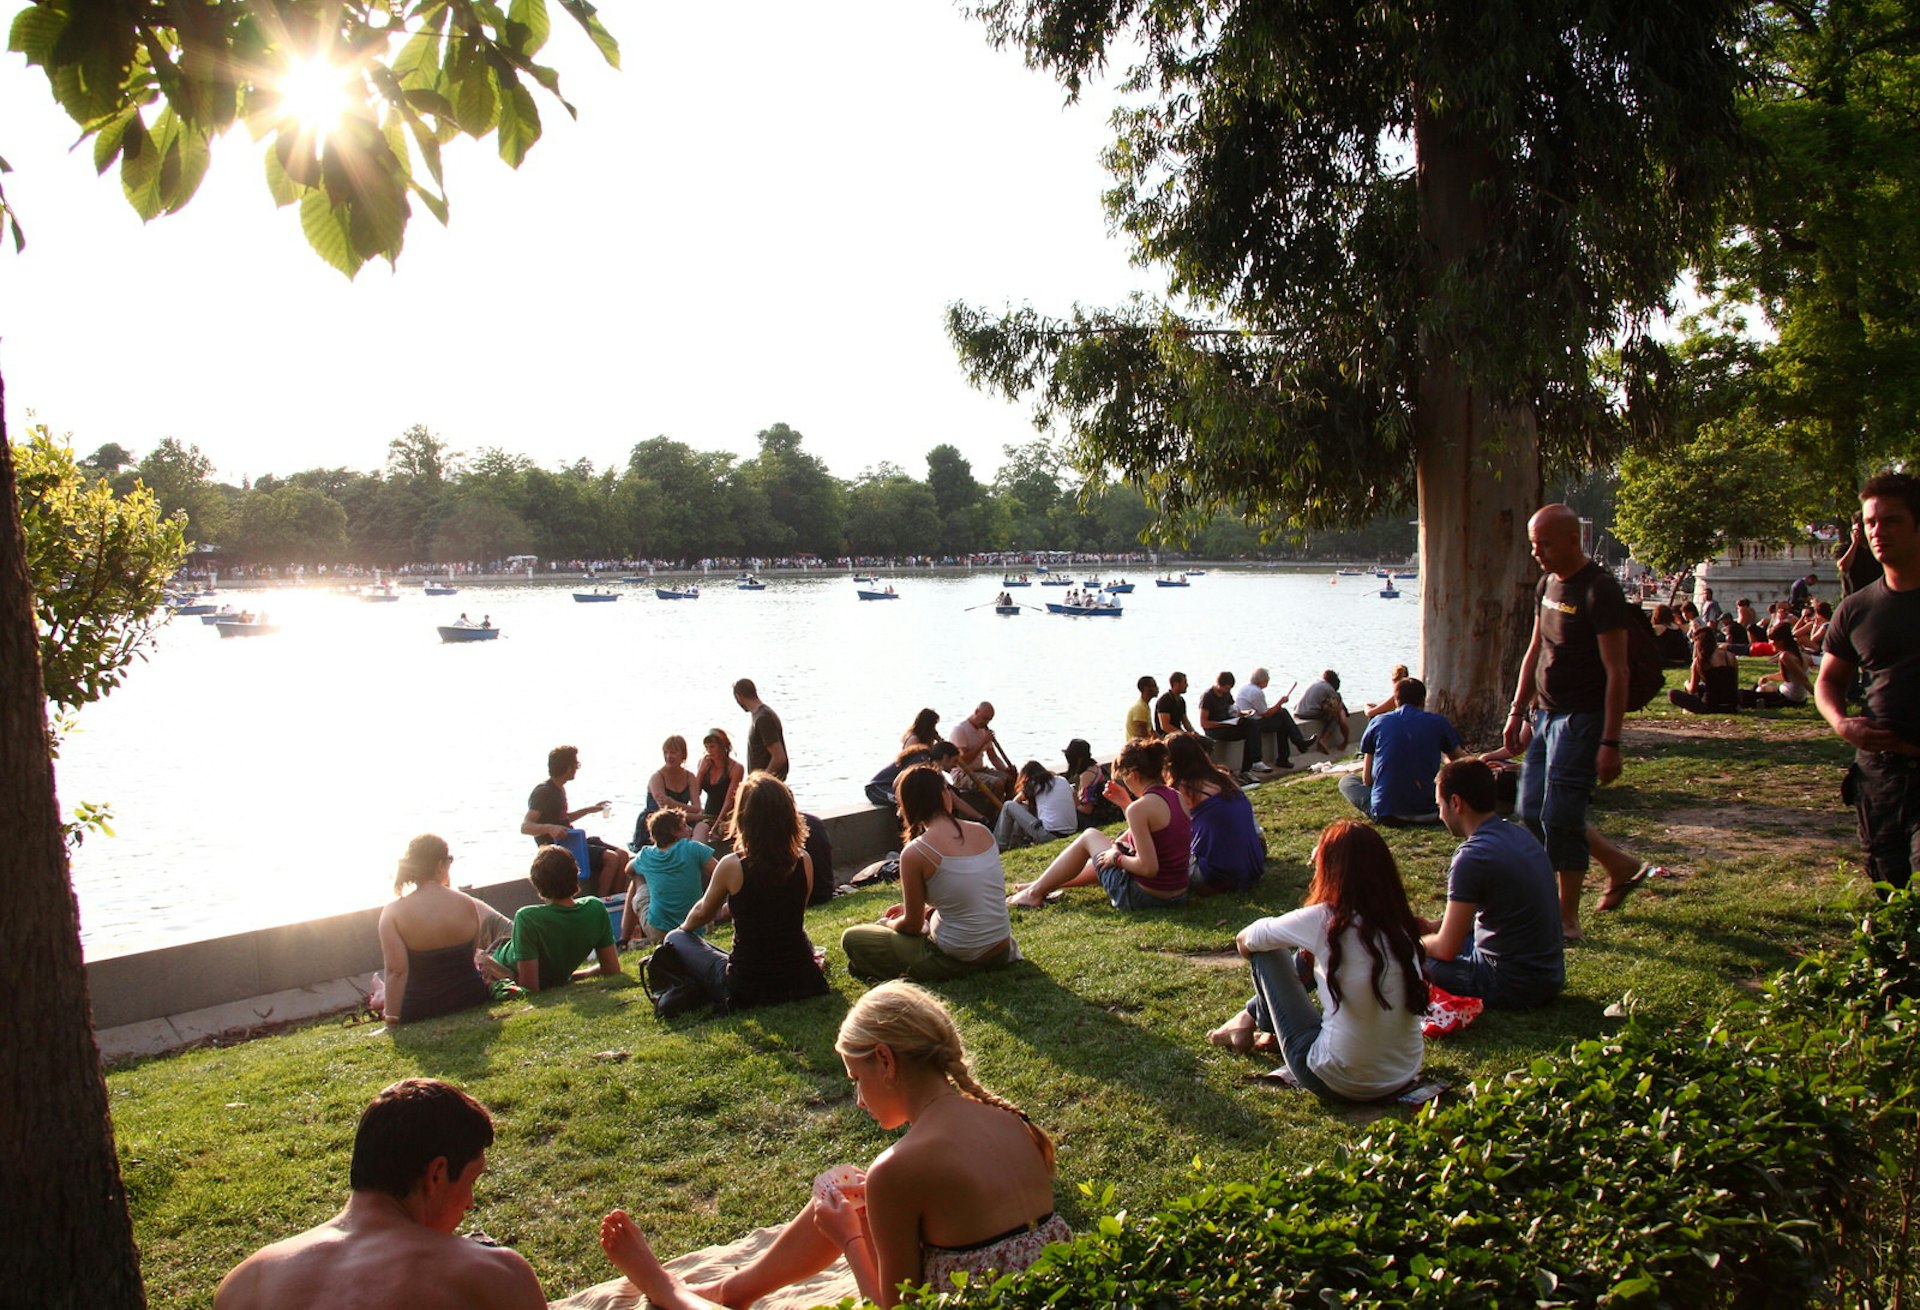 People enjoying the Parque del Retiro in Madrid, Spain